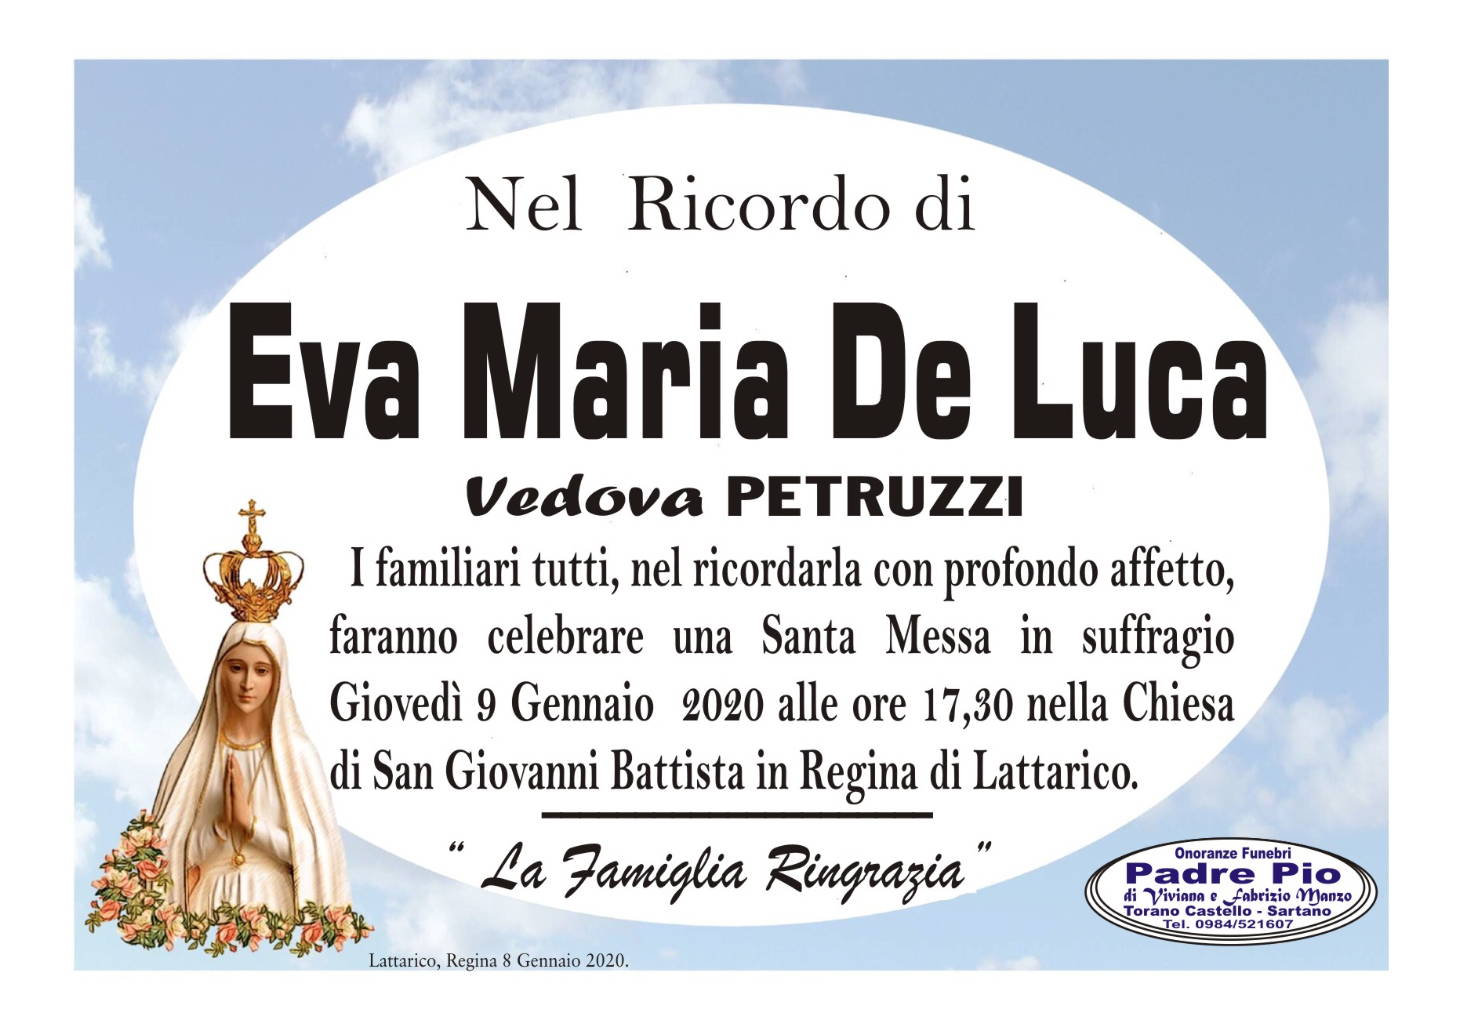 Eva Maria De Luca